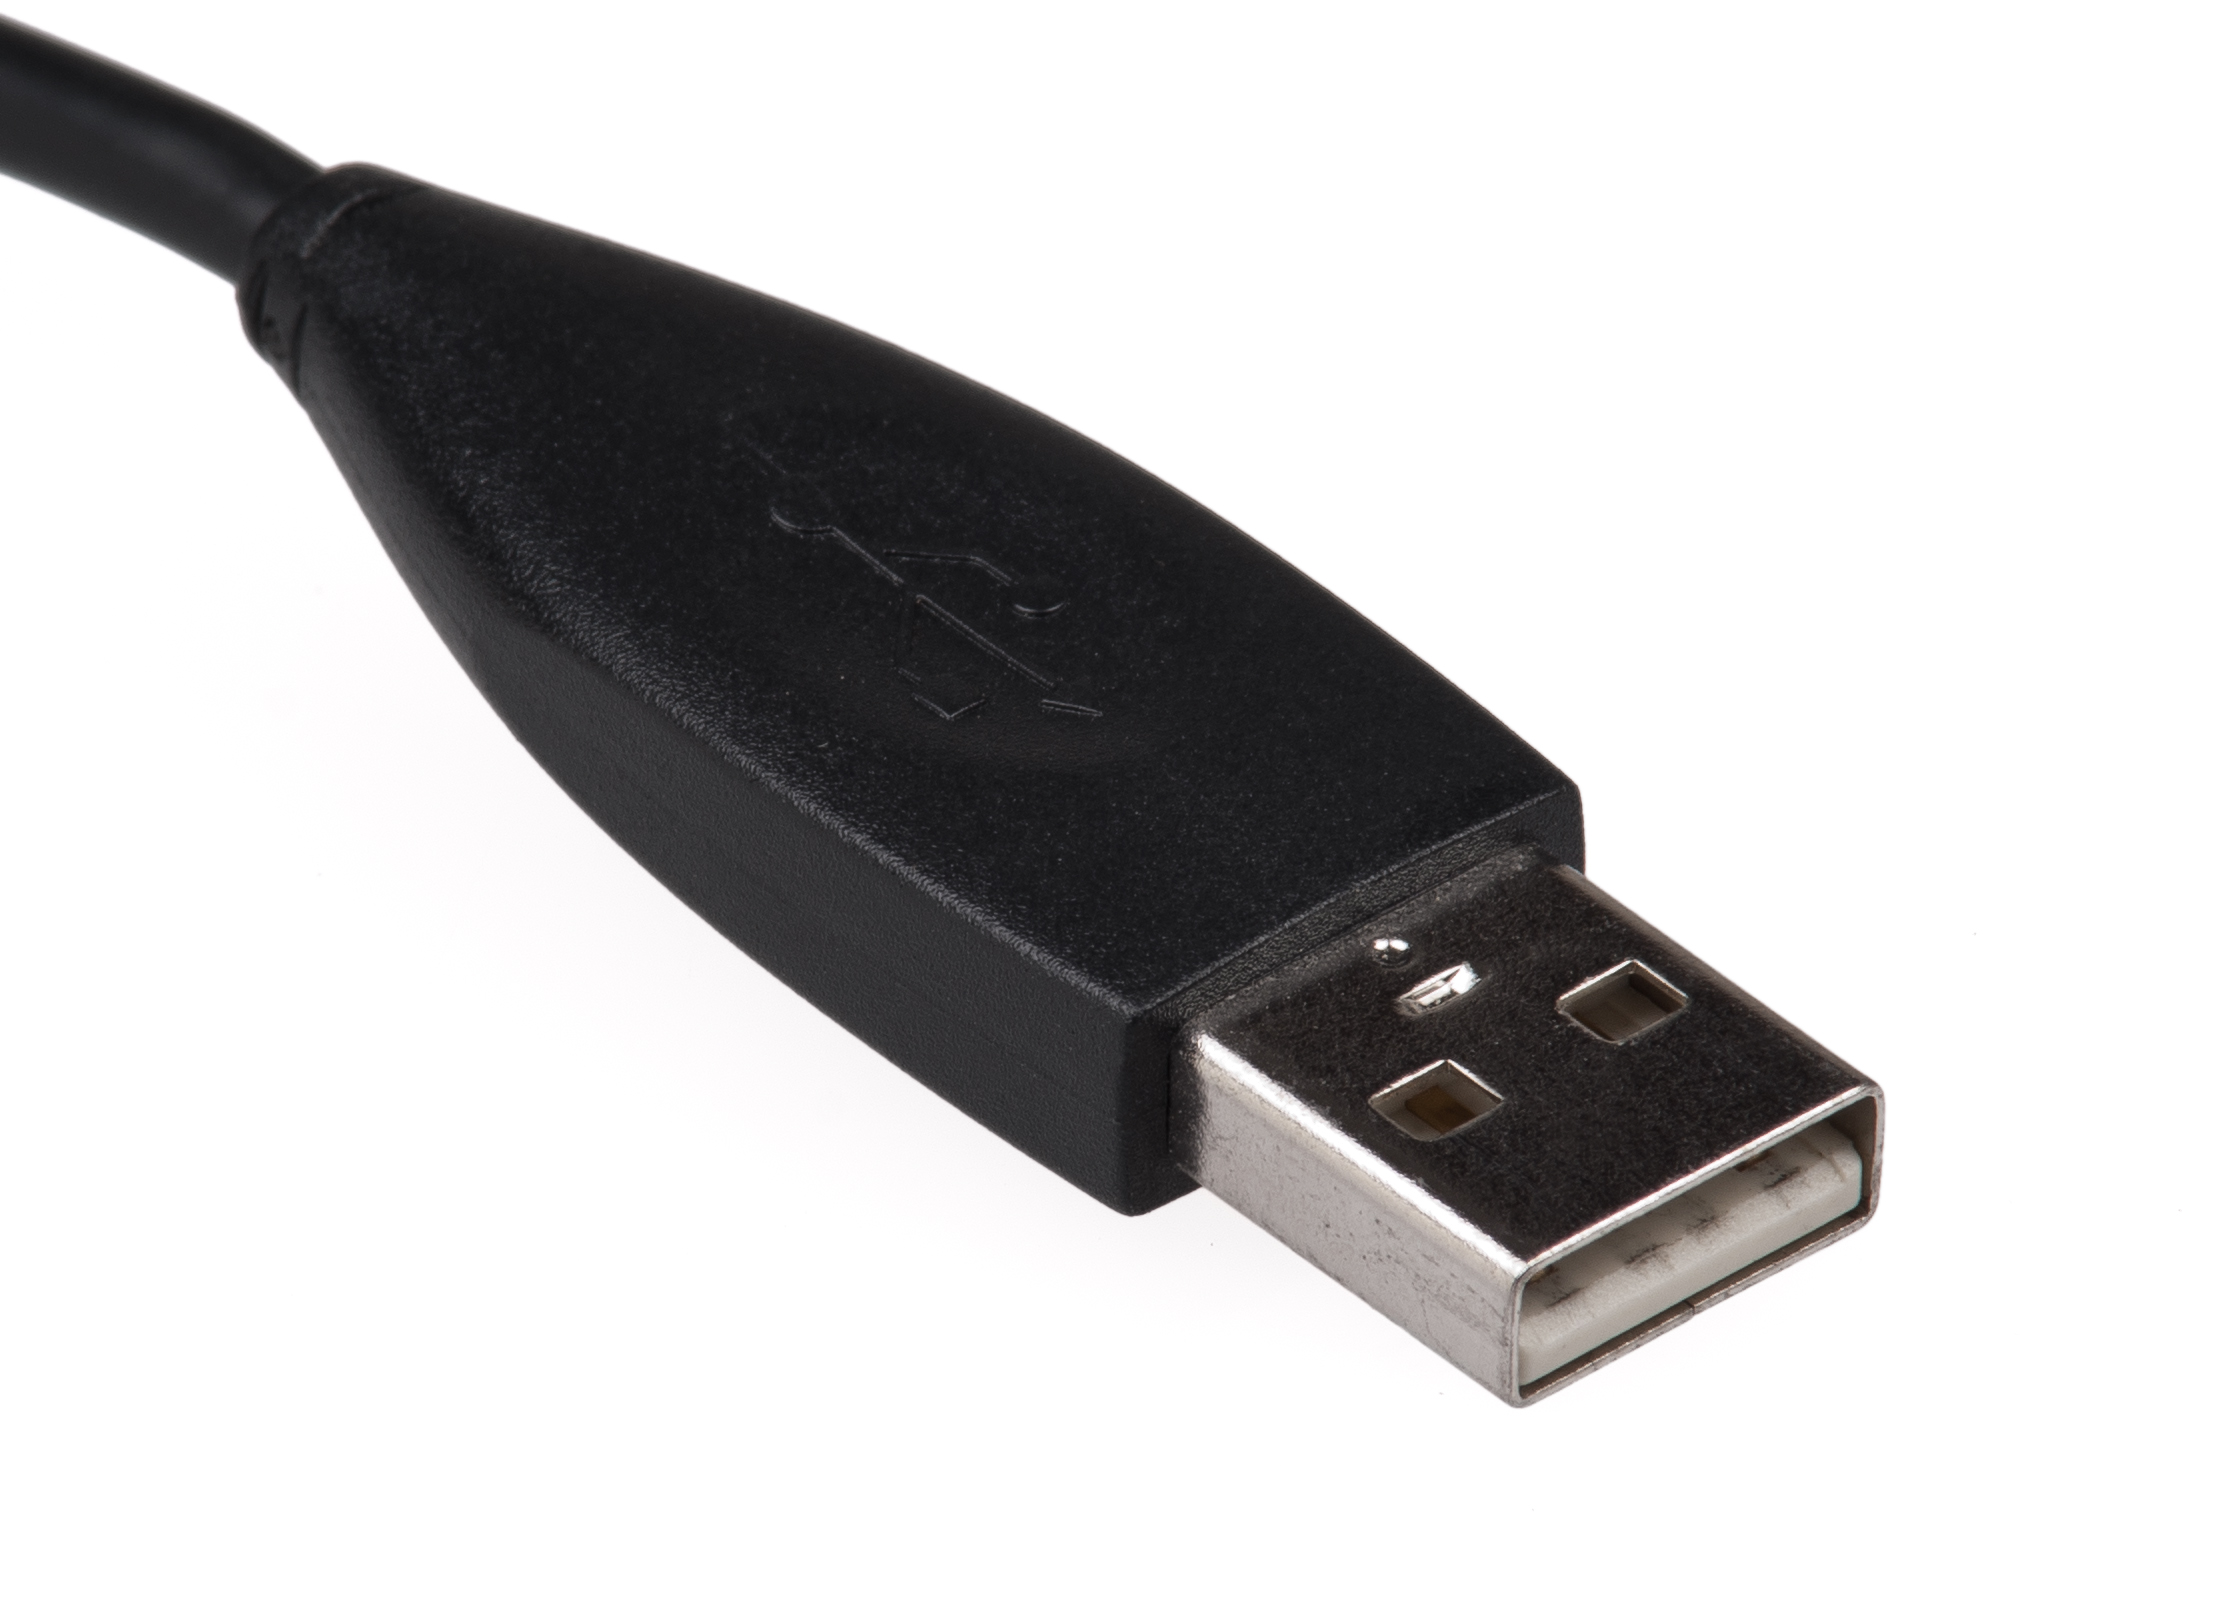 File:USB-Connector-Standard.jpg - Wikimedia Commons